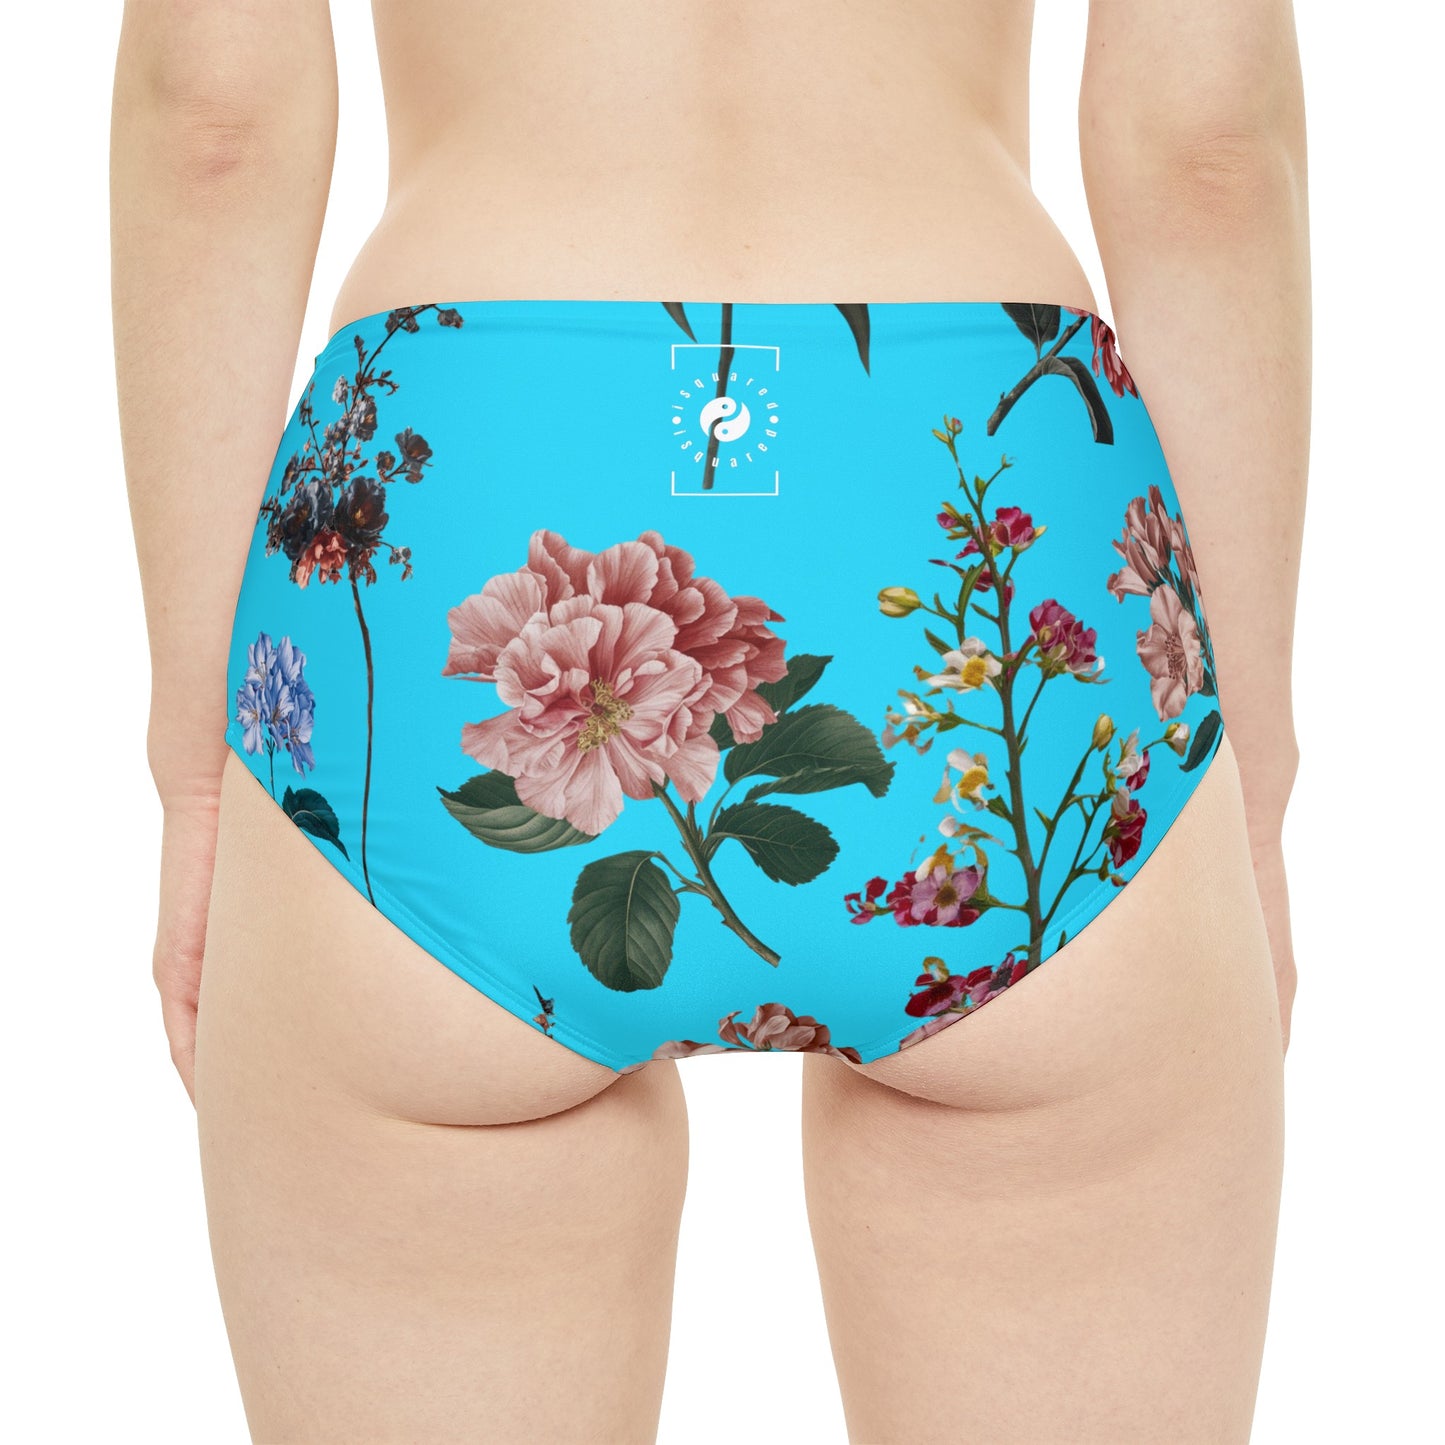 Botanicals on Azure - High Waisted Bikini Bottom